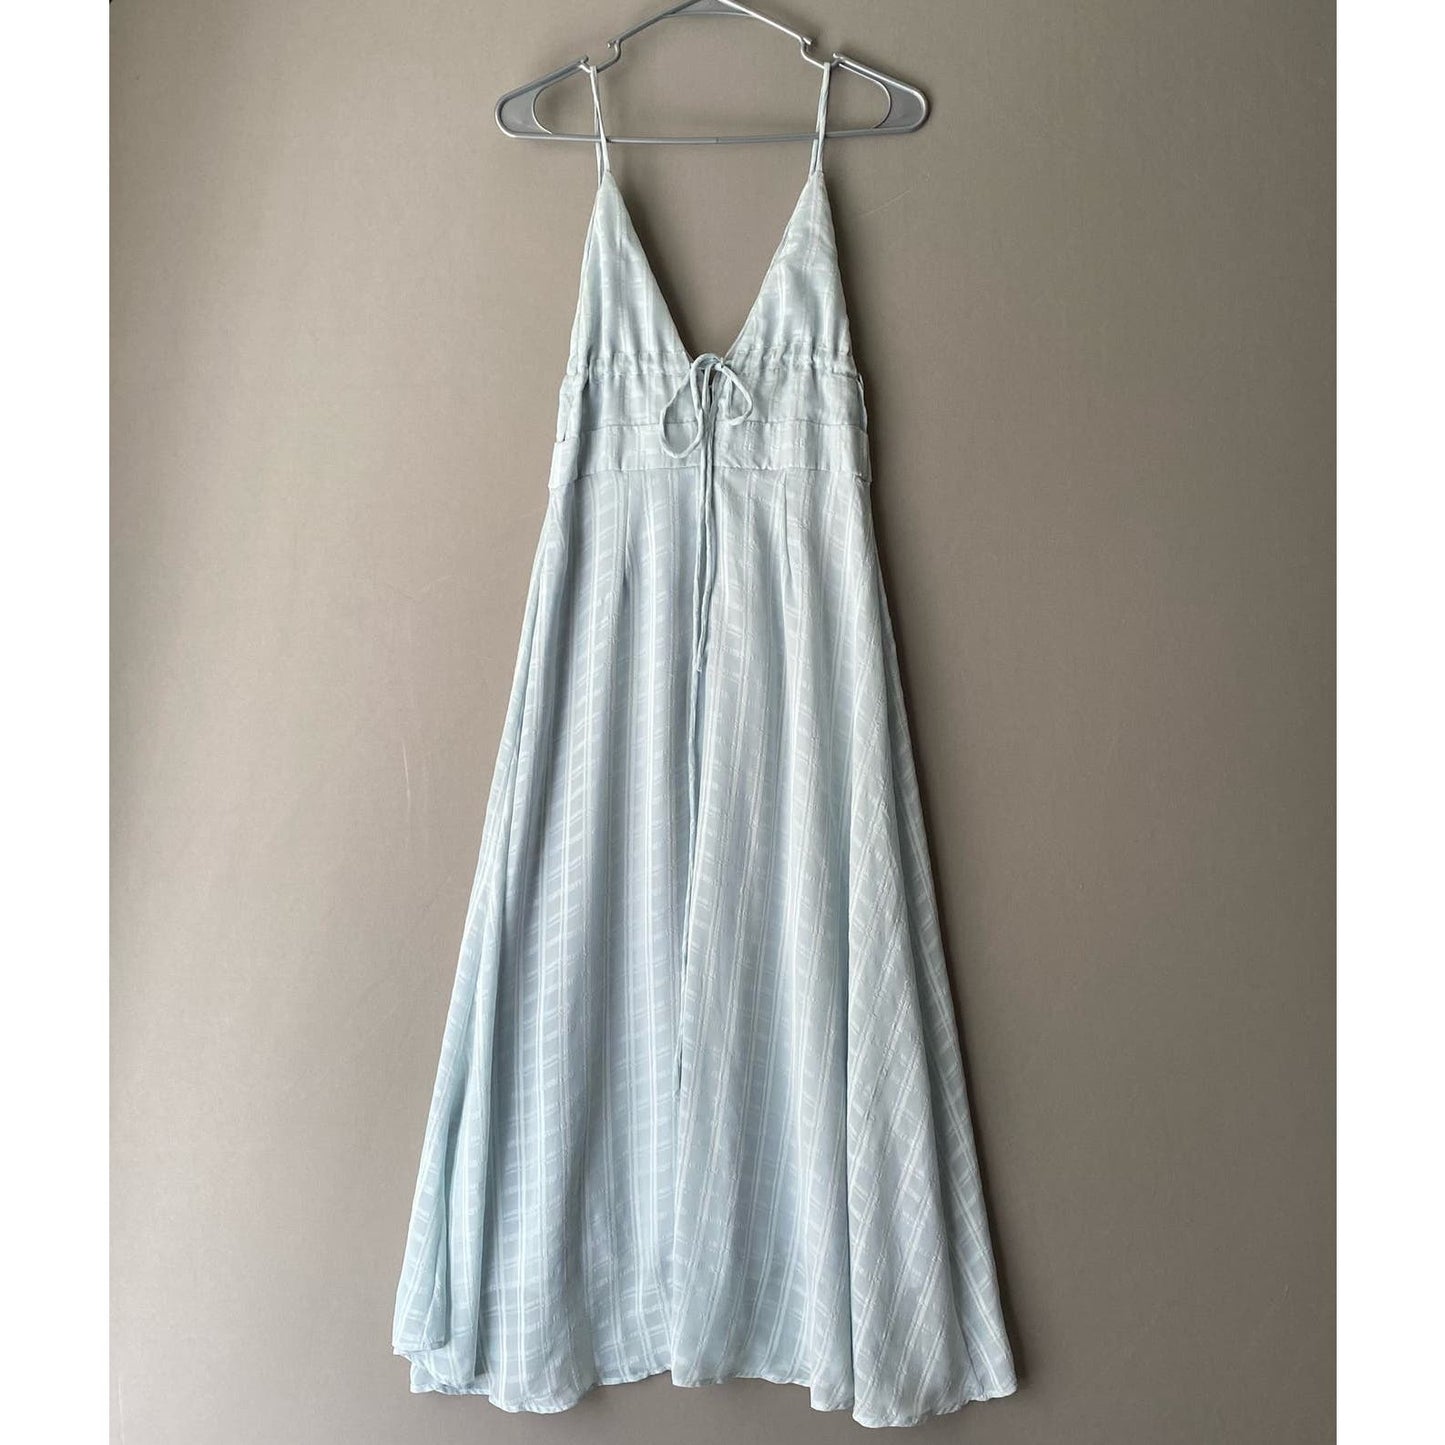 Lulu's sz S baby blue spaghetti strapped plunge summer midi dress